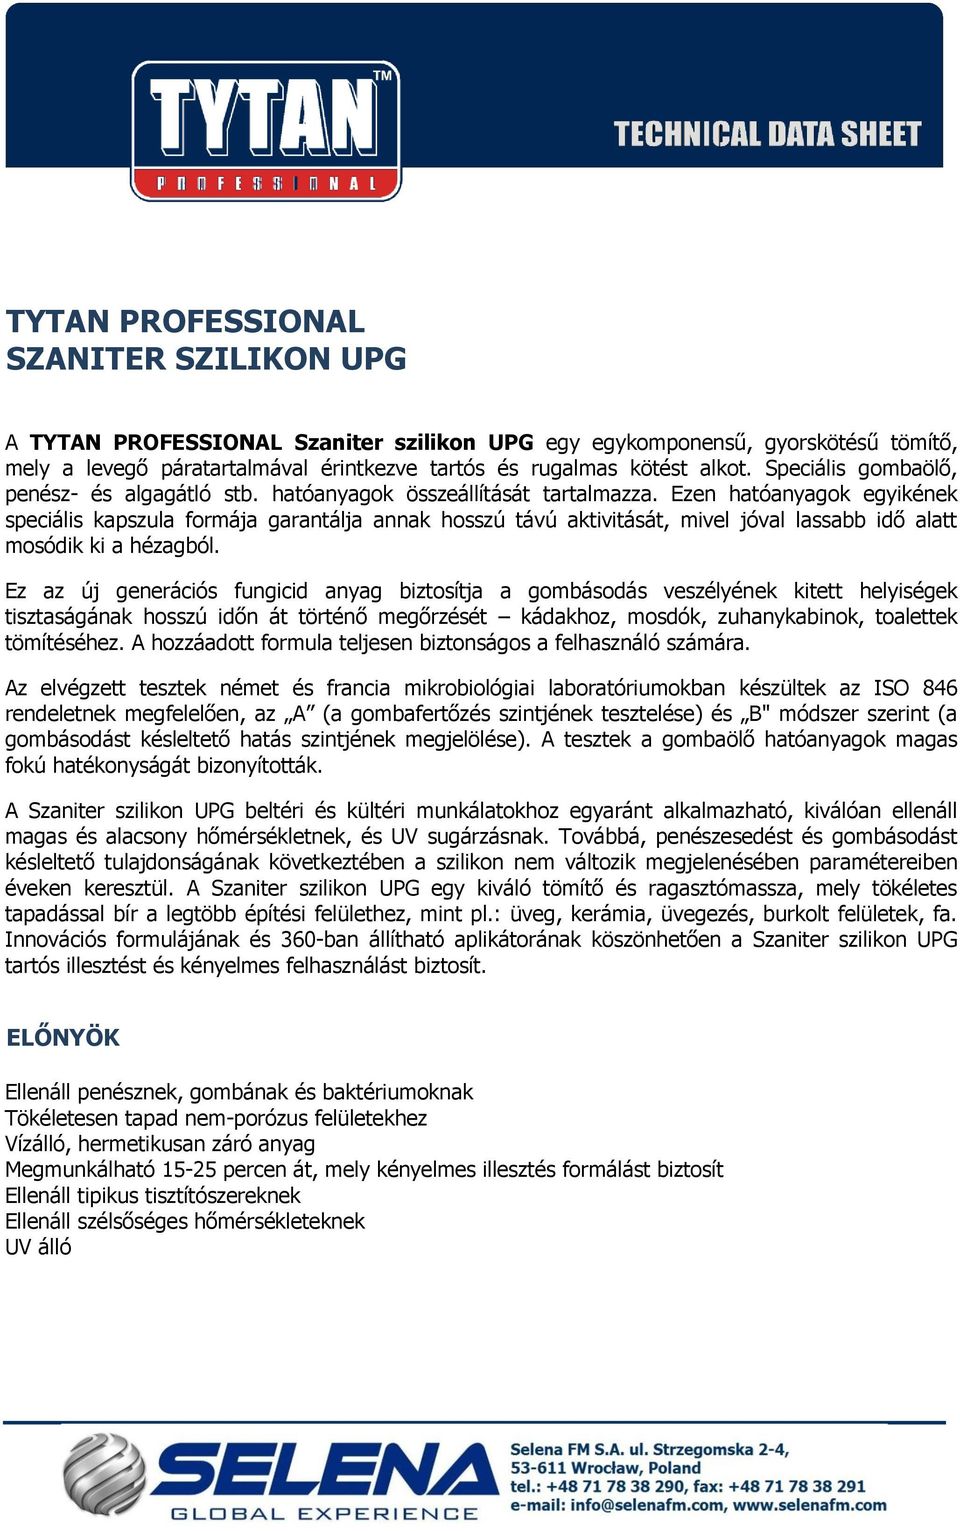 TYTAN PROFESSIONAL SZANITER SZILIKON UPG - PDF Free Download